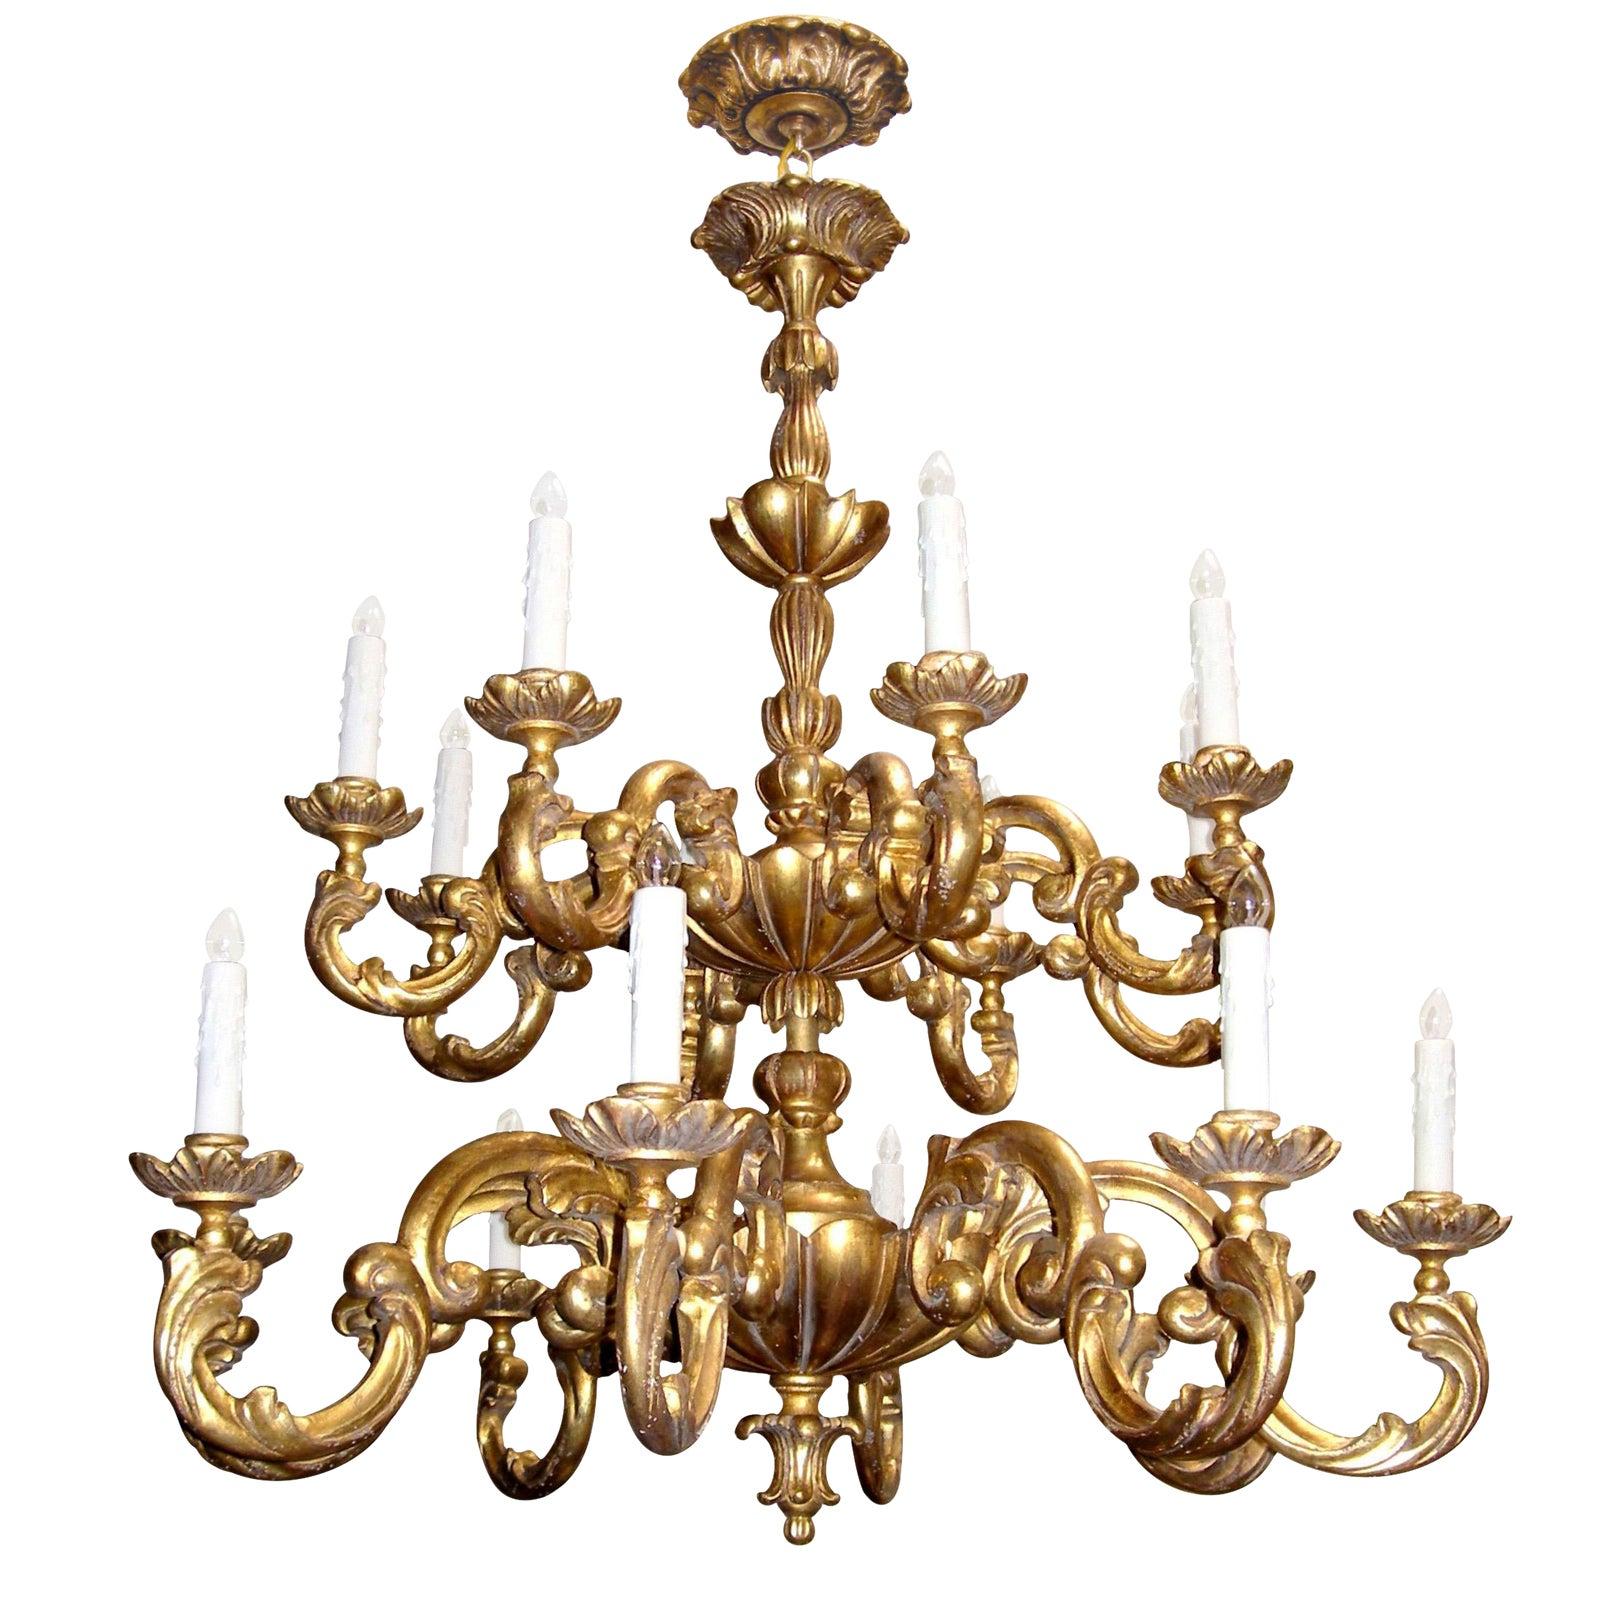 Italian giltwood two-tier sixteen arm Verochio chandelier by Randy Esada

Dimensions: 36